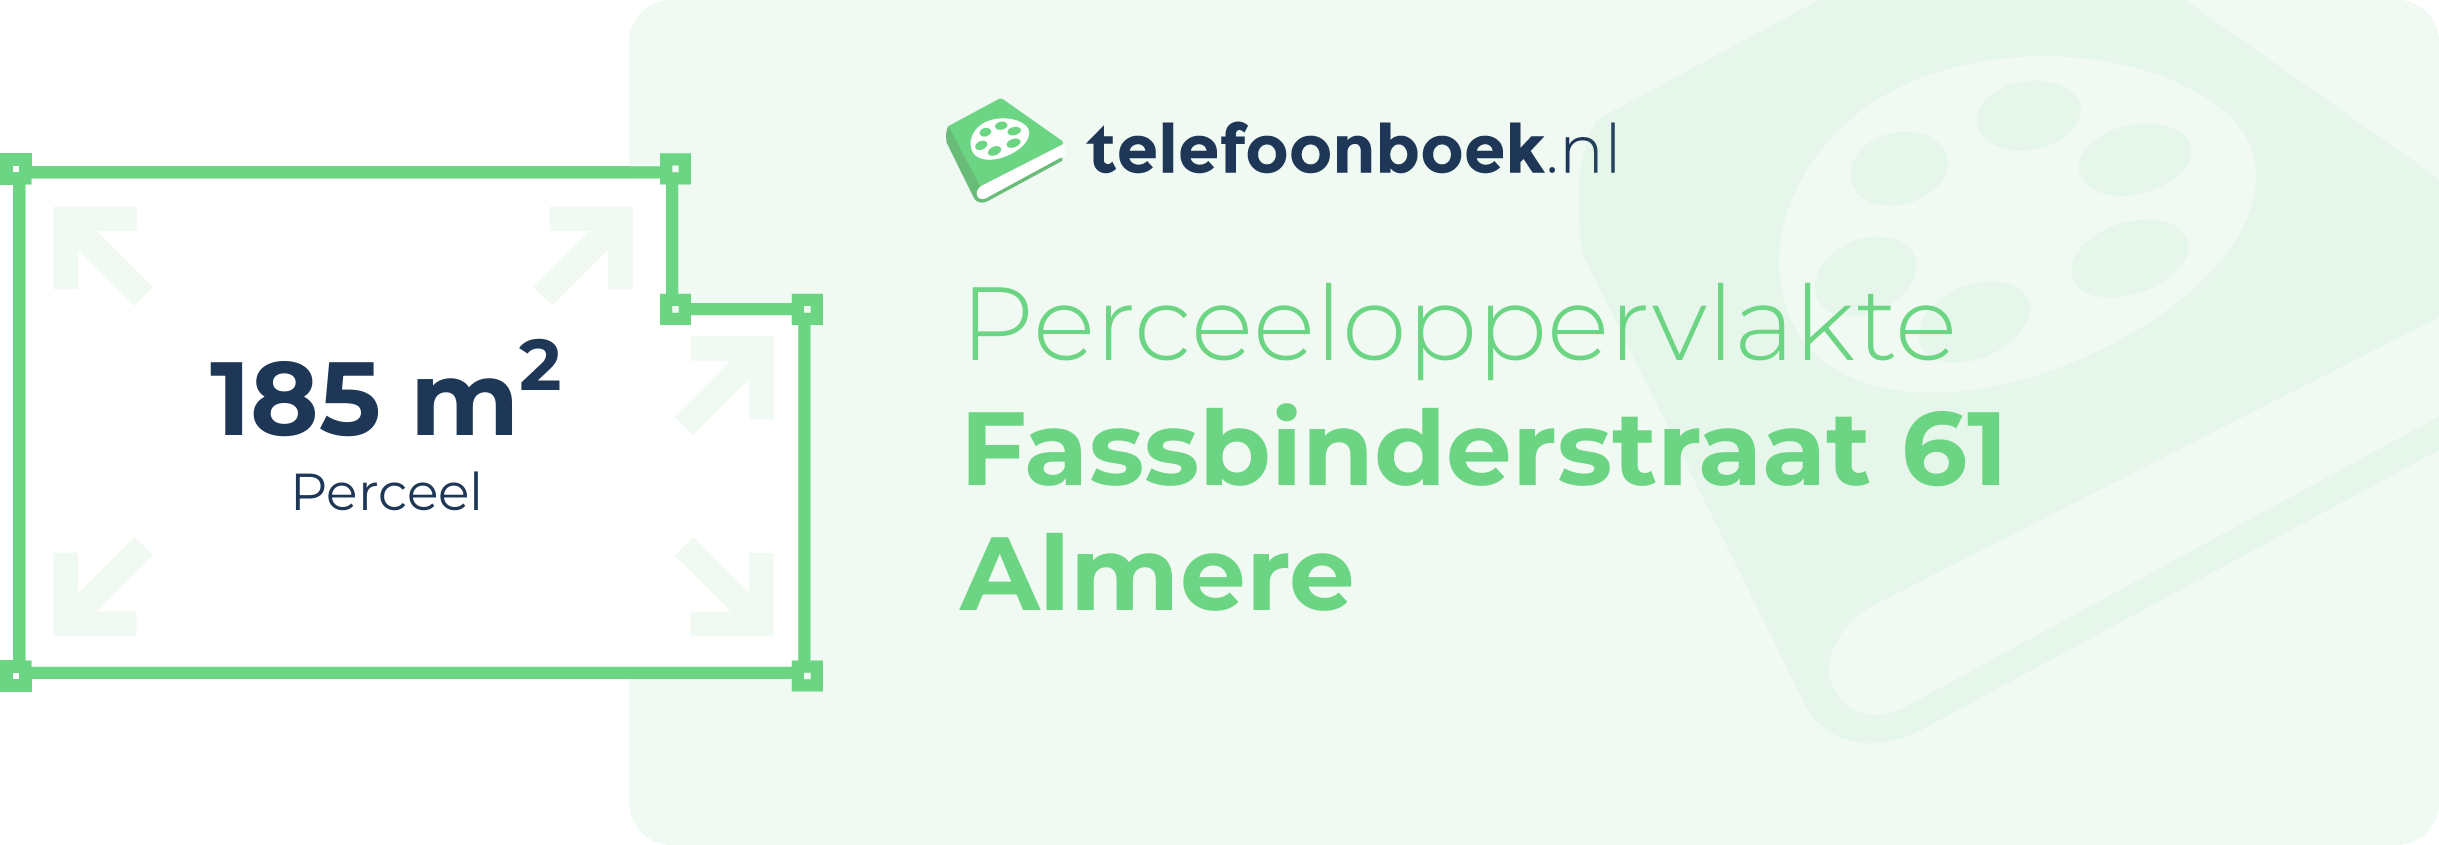 Perceeloppervlakte Fassbinderstraat 61 Almere